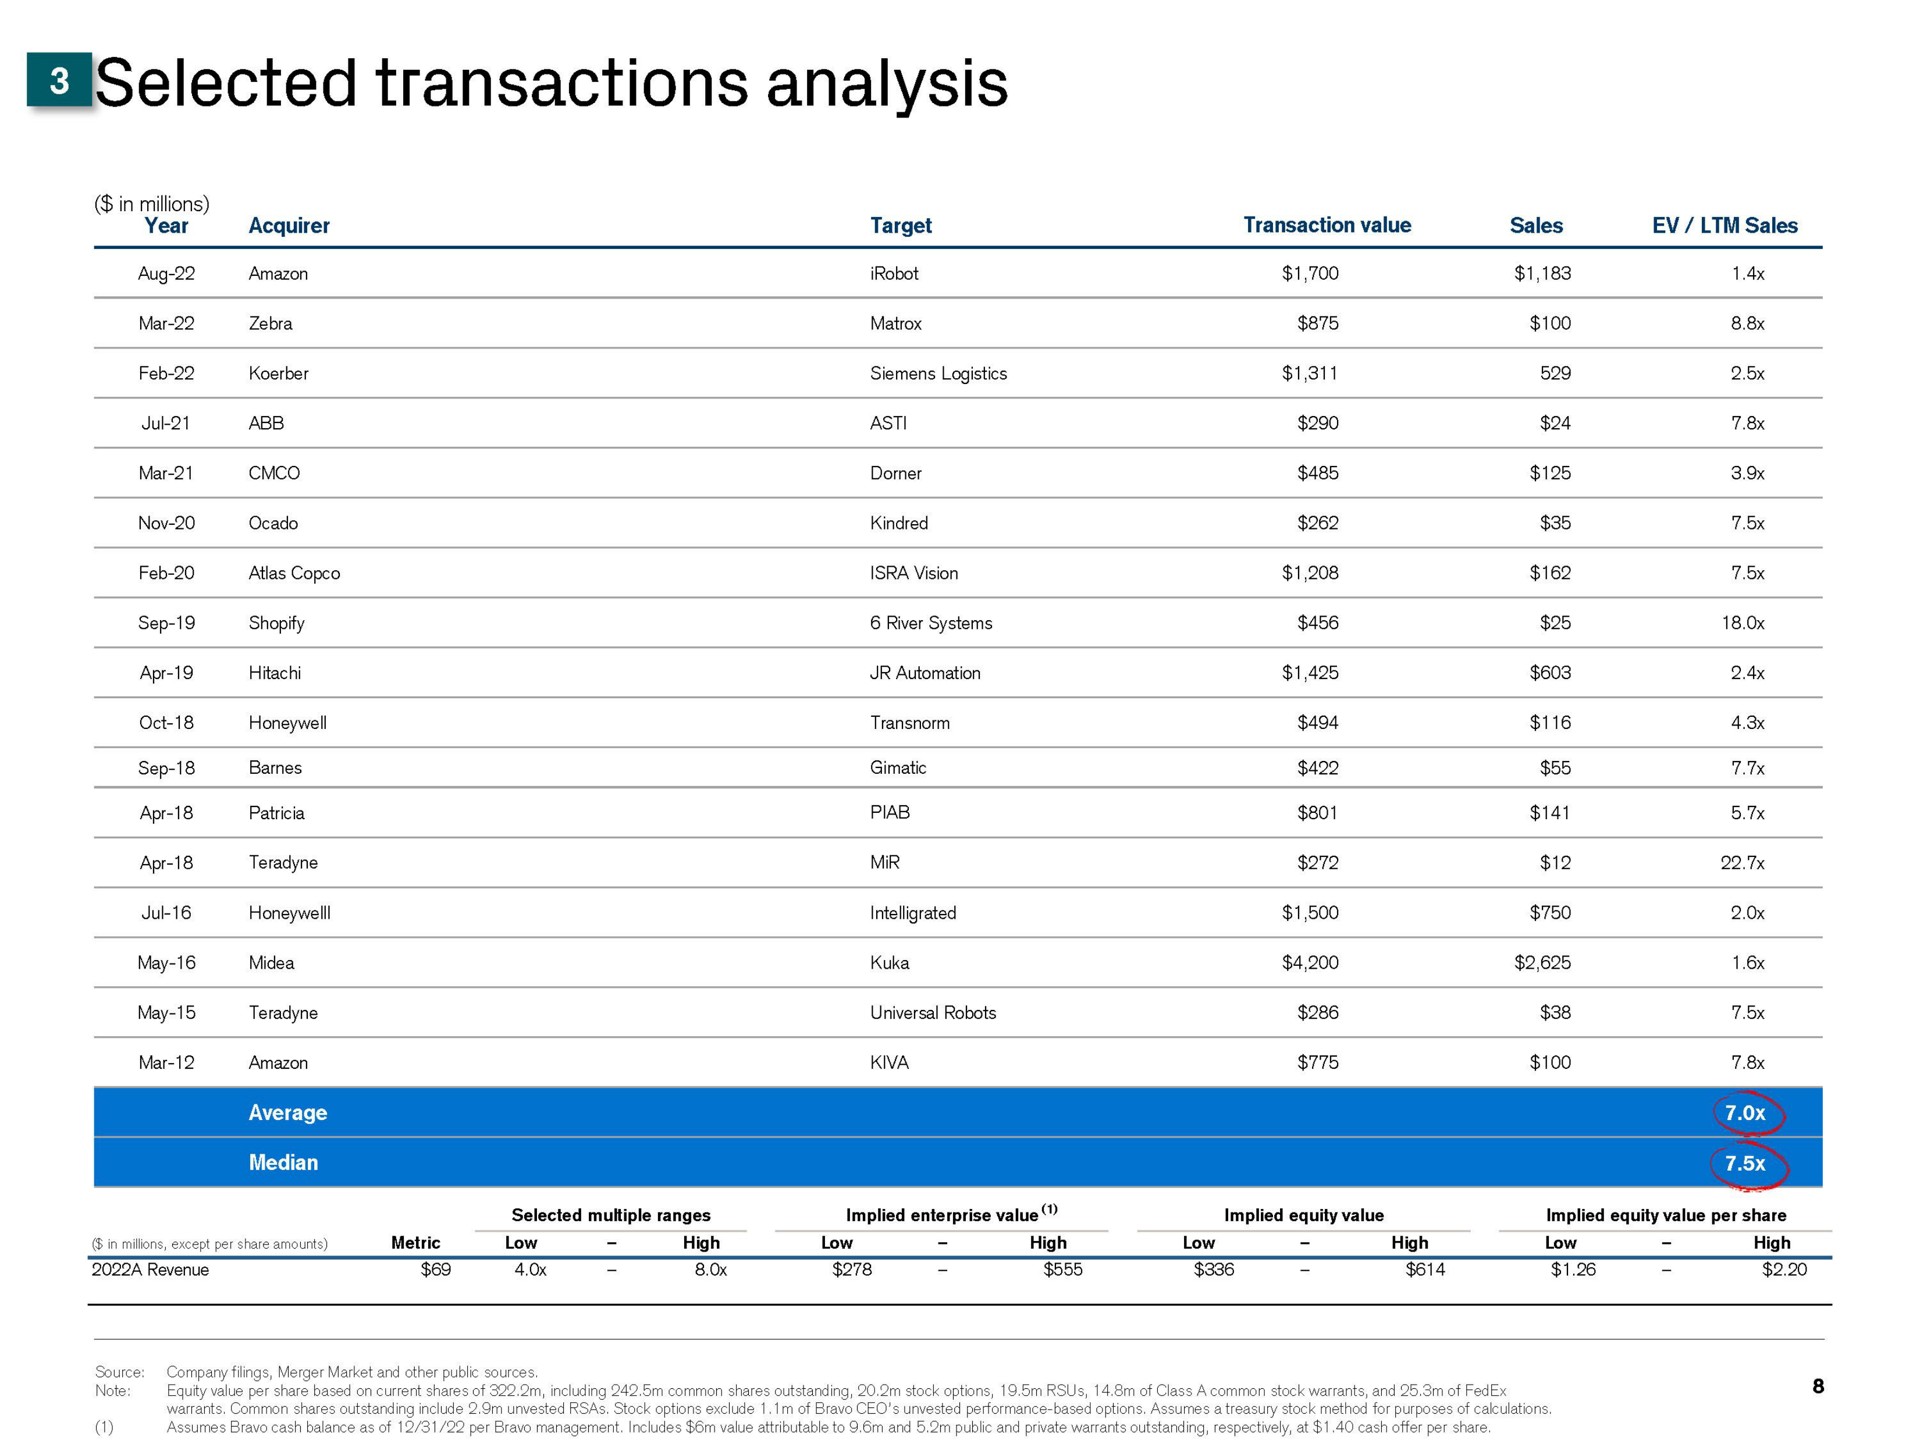 transactions analysis | Credit Suisse